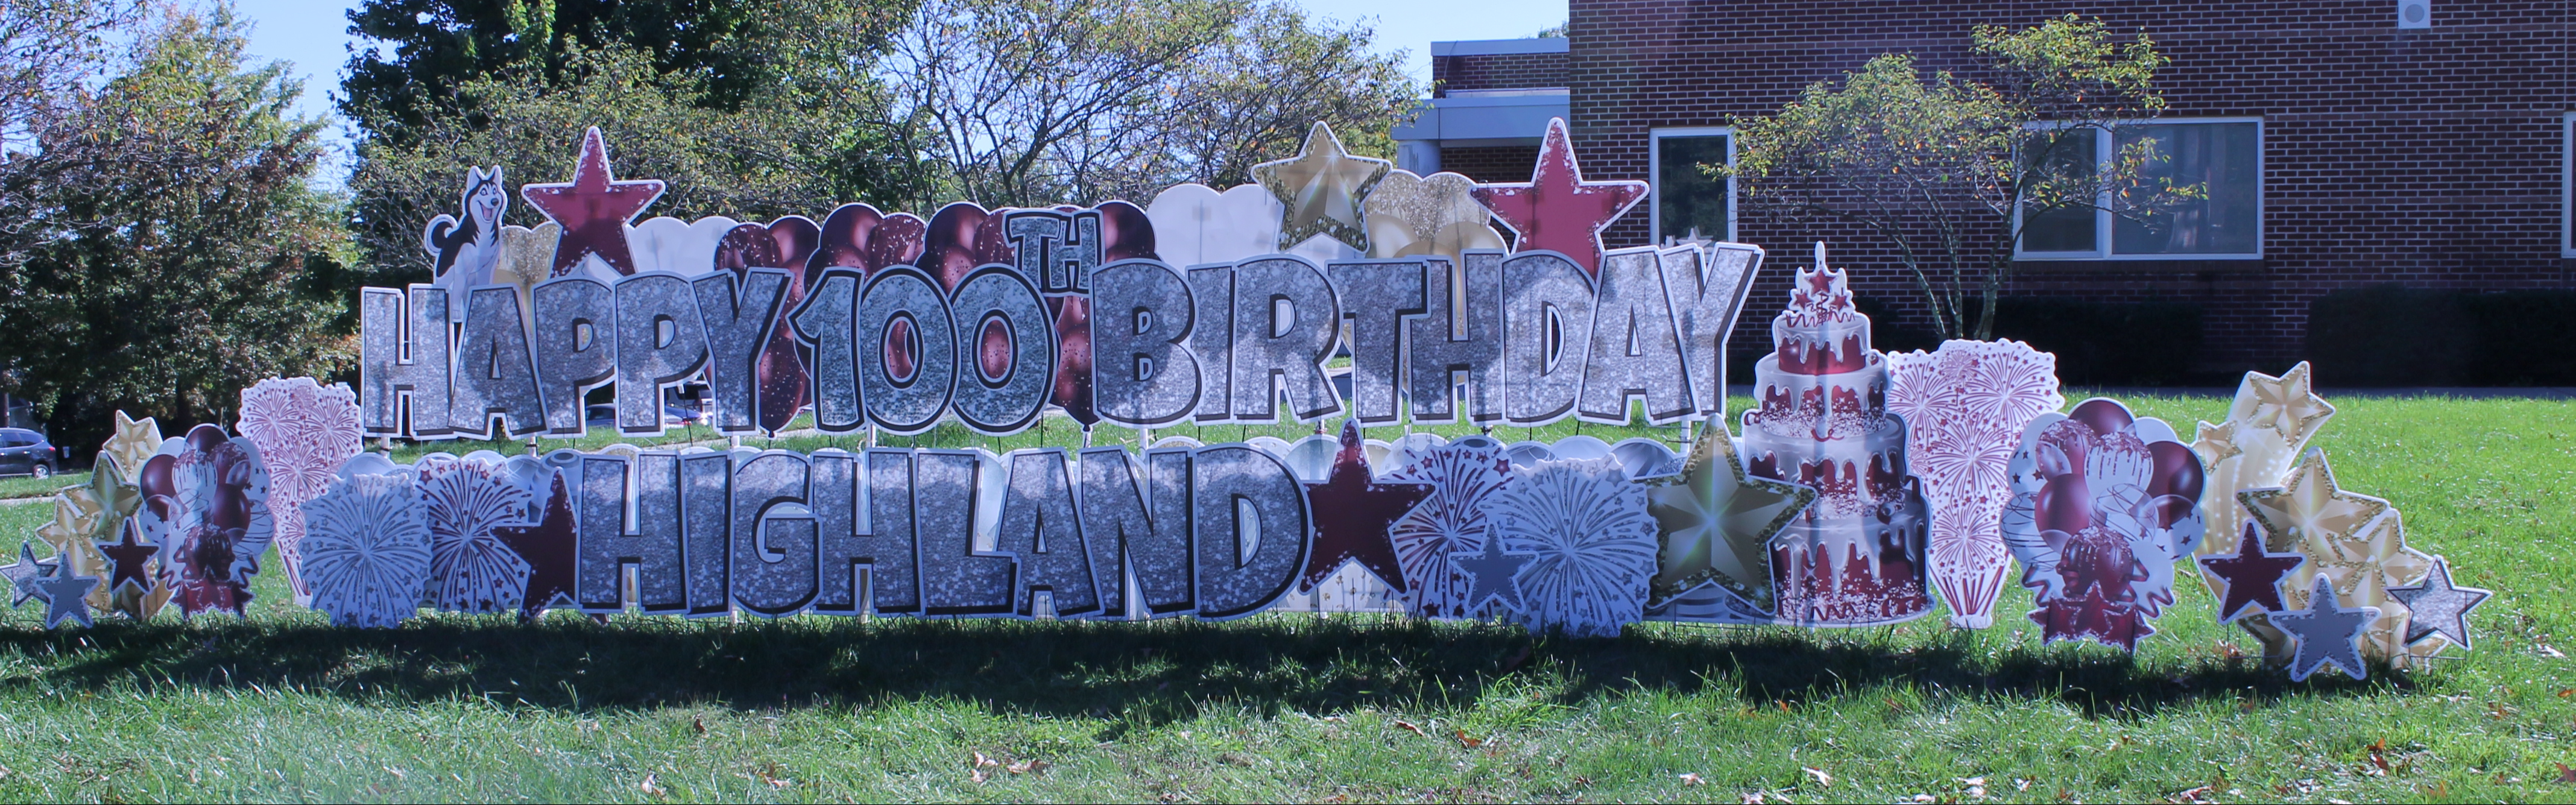 Happy Birthday Highland 100th Birthday Sign in Front of School